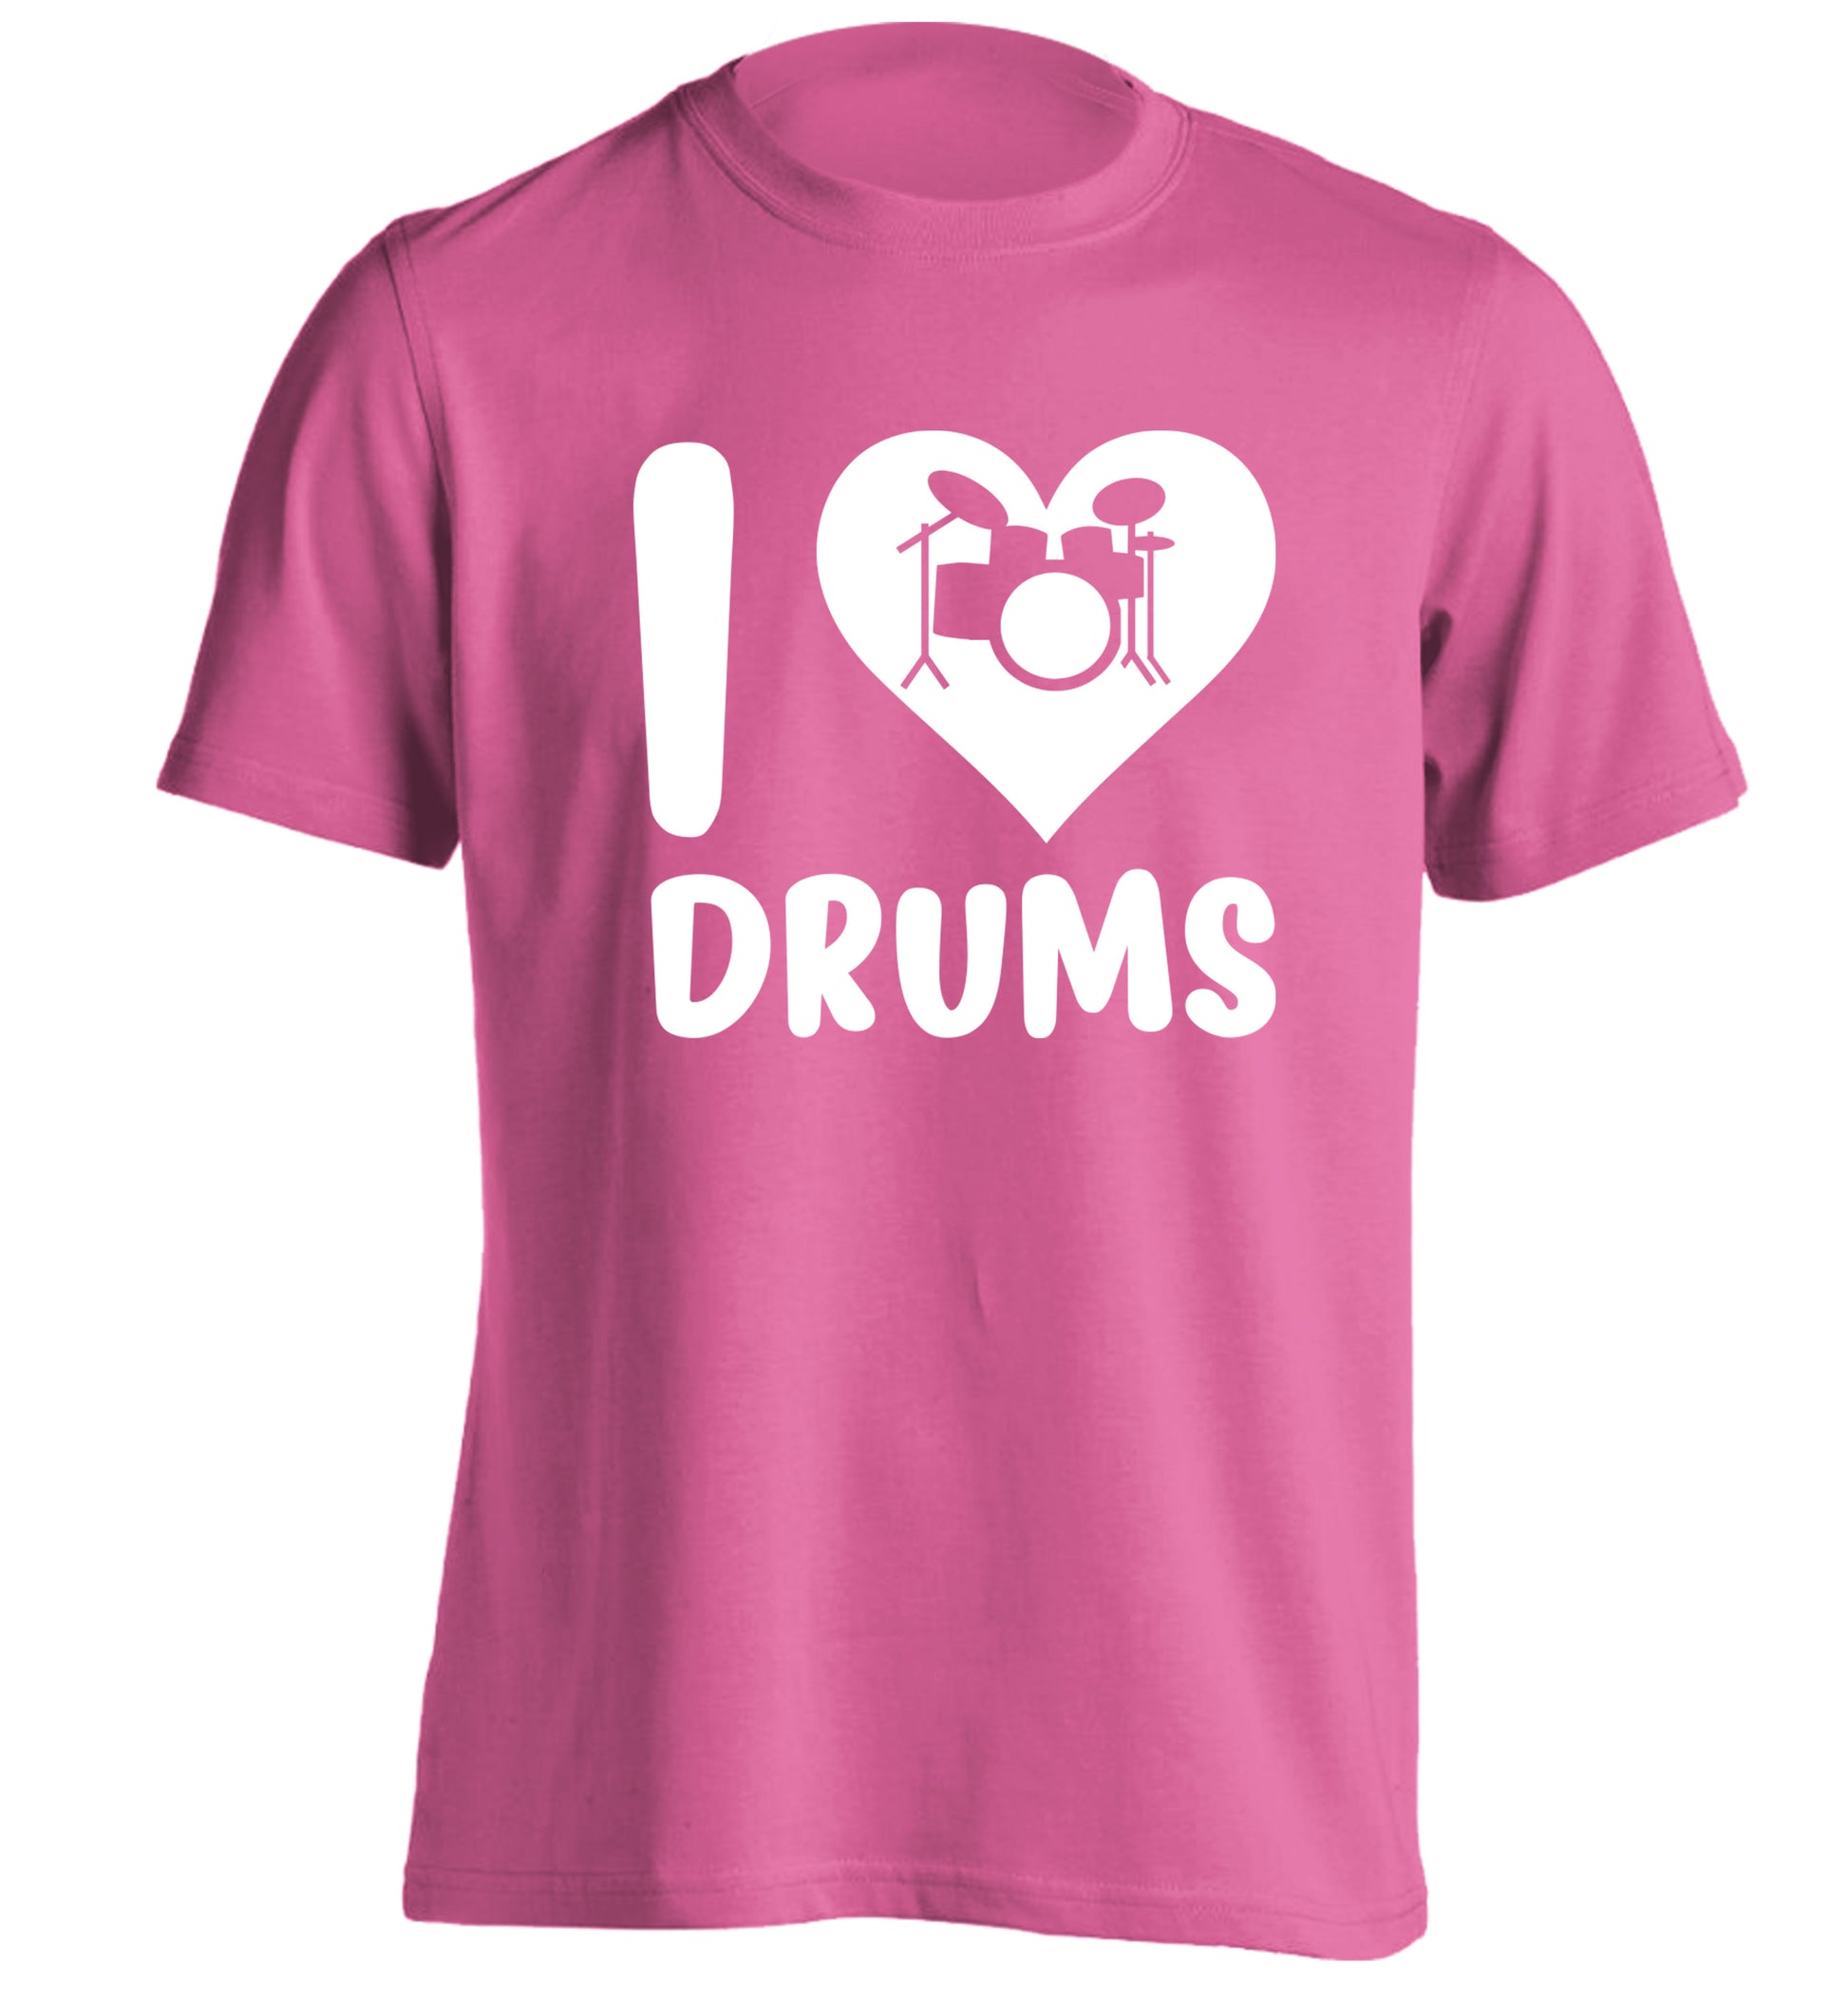 I love drums adults unisex pink Tshirt 2XL